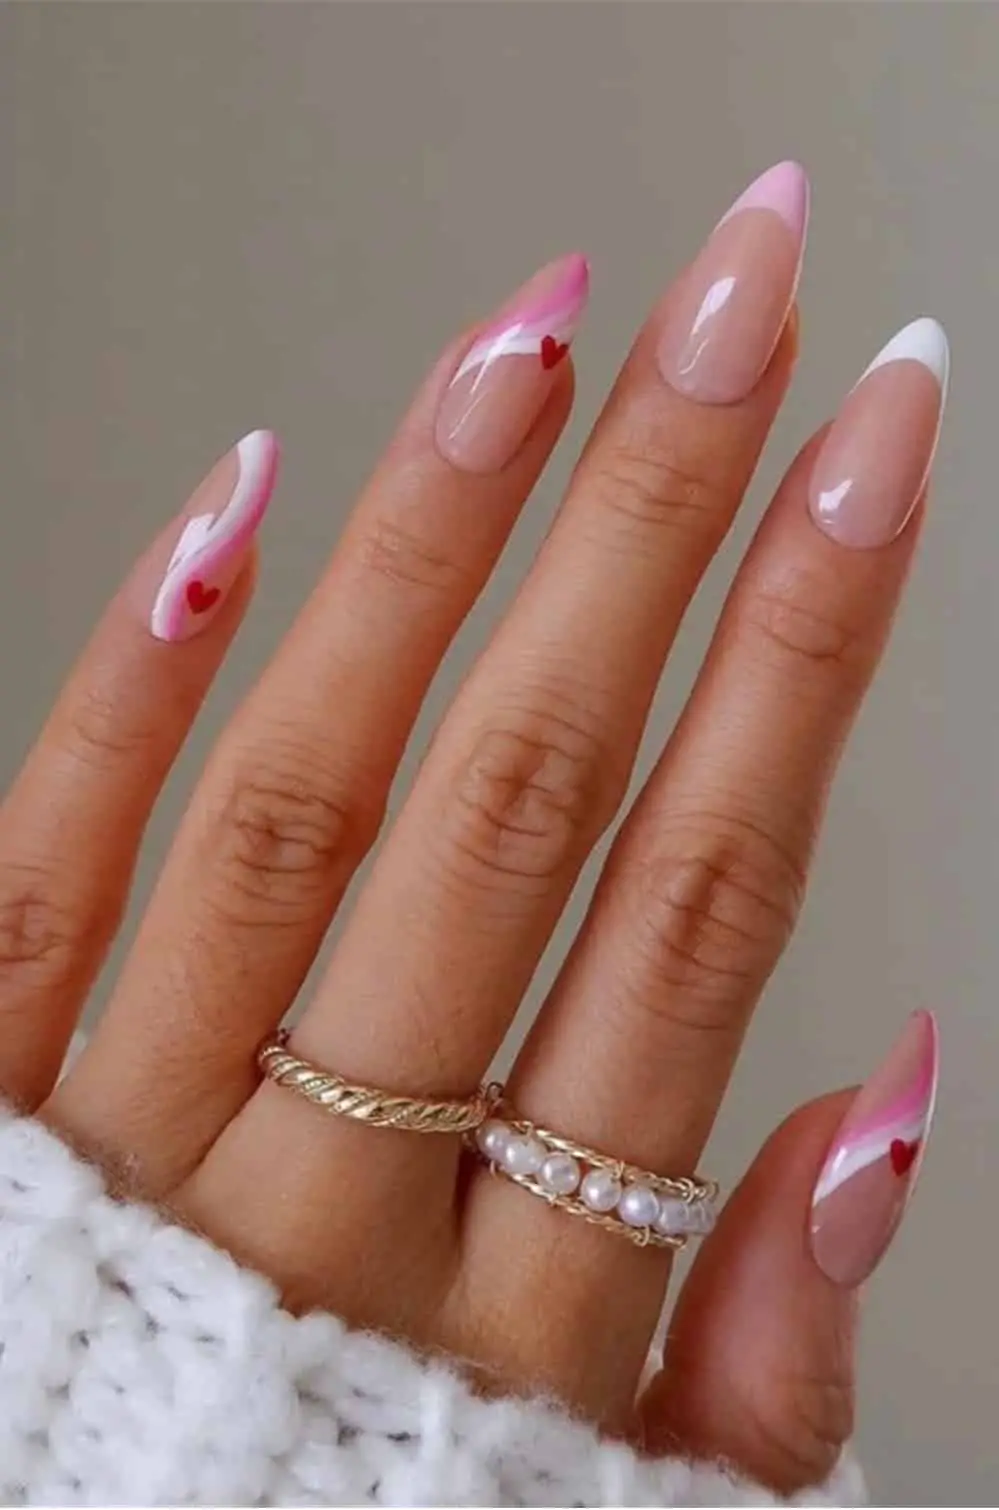 chic nail designs